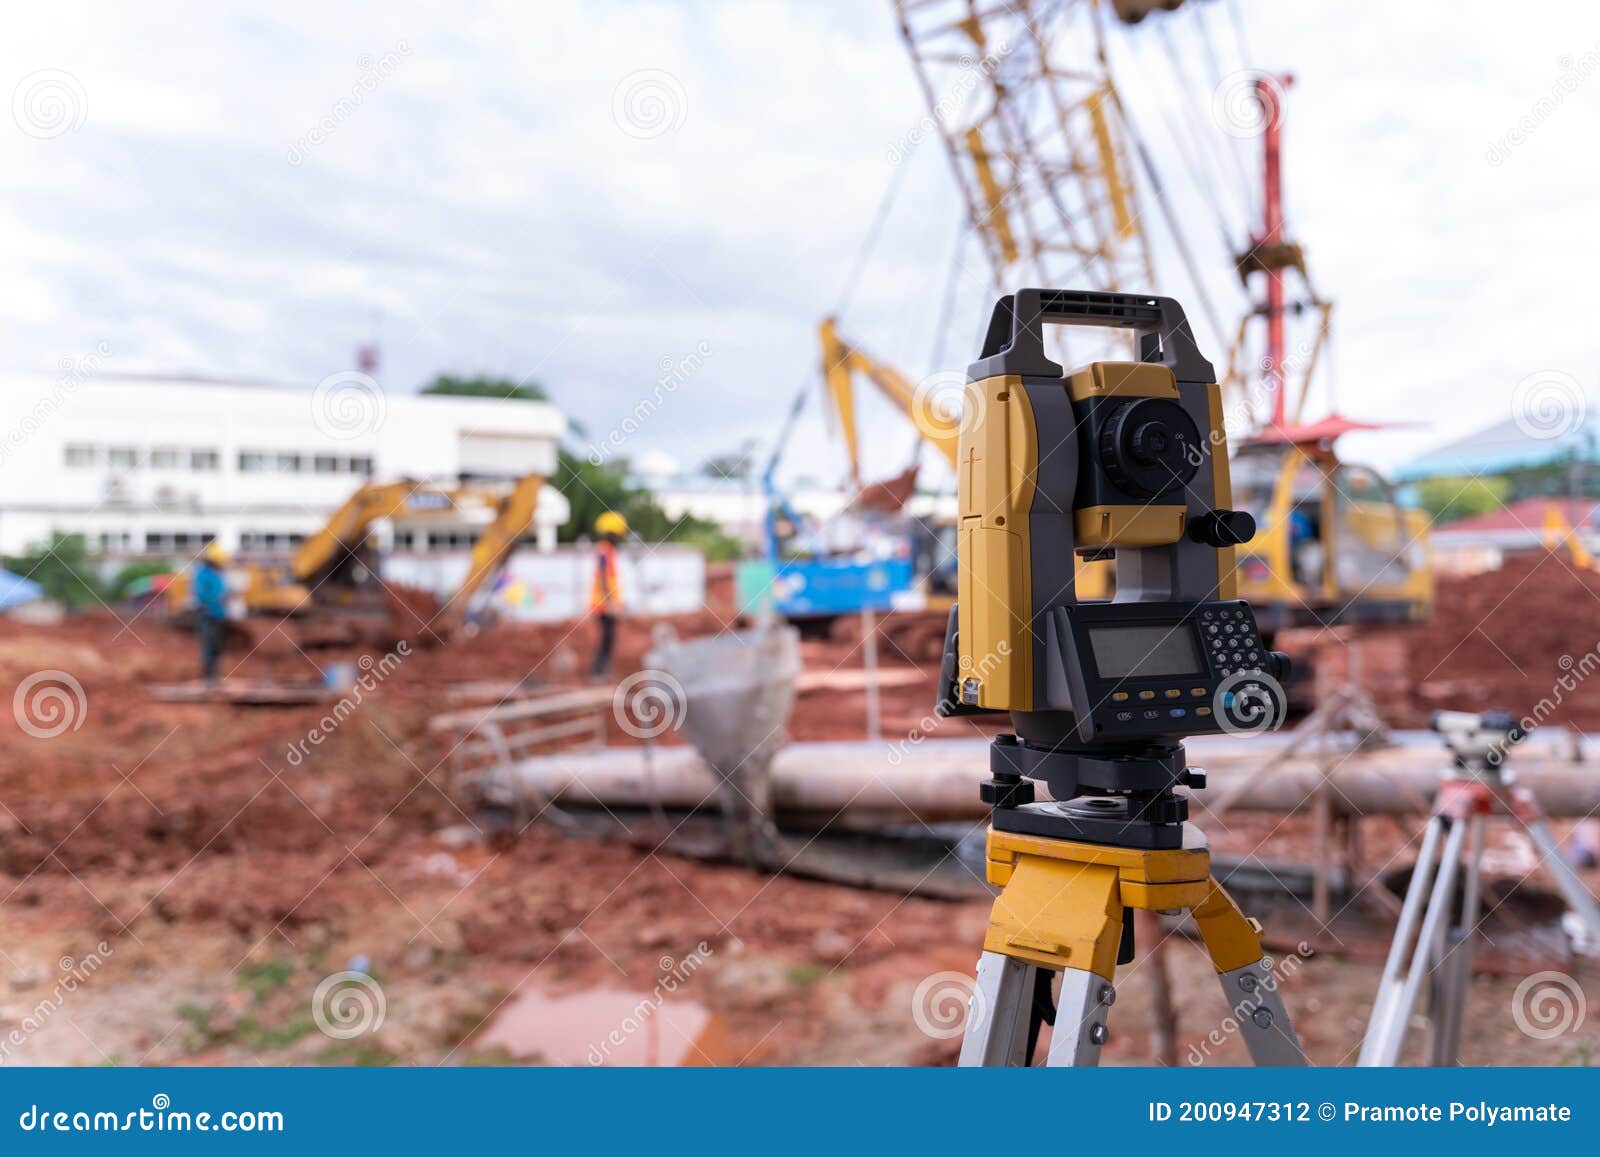 theodolite equipment  of surveyor builder engineer during surveying work in construction site